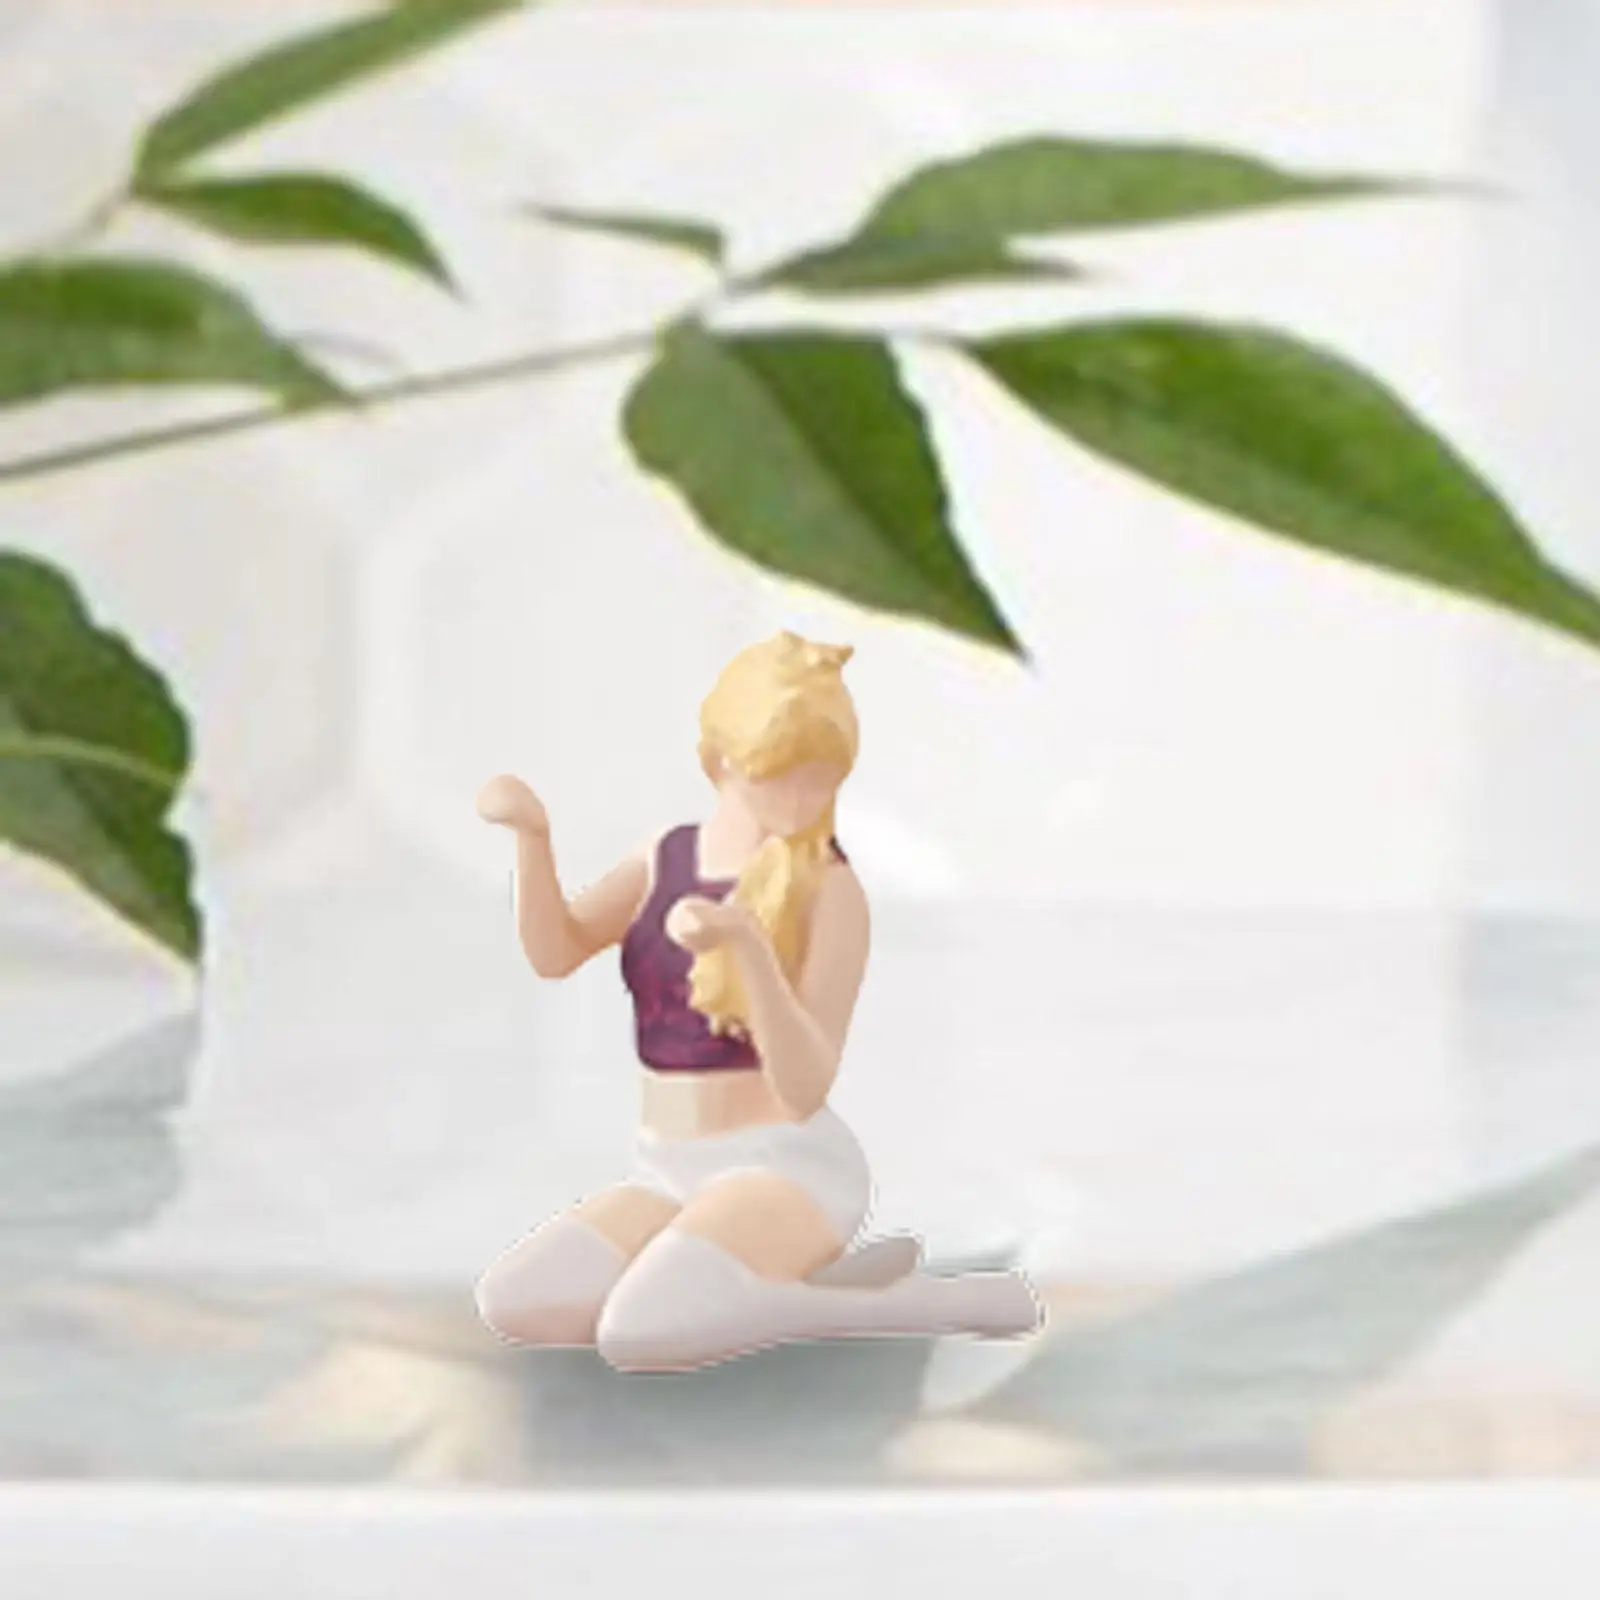 1/64 Figure Housemaid Miniature Scene Resin Handpainted Figurine Doll for S Gauge Fairy Garden Accessory Diorama Scenery Layouts